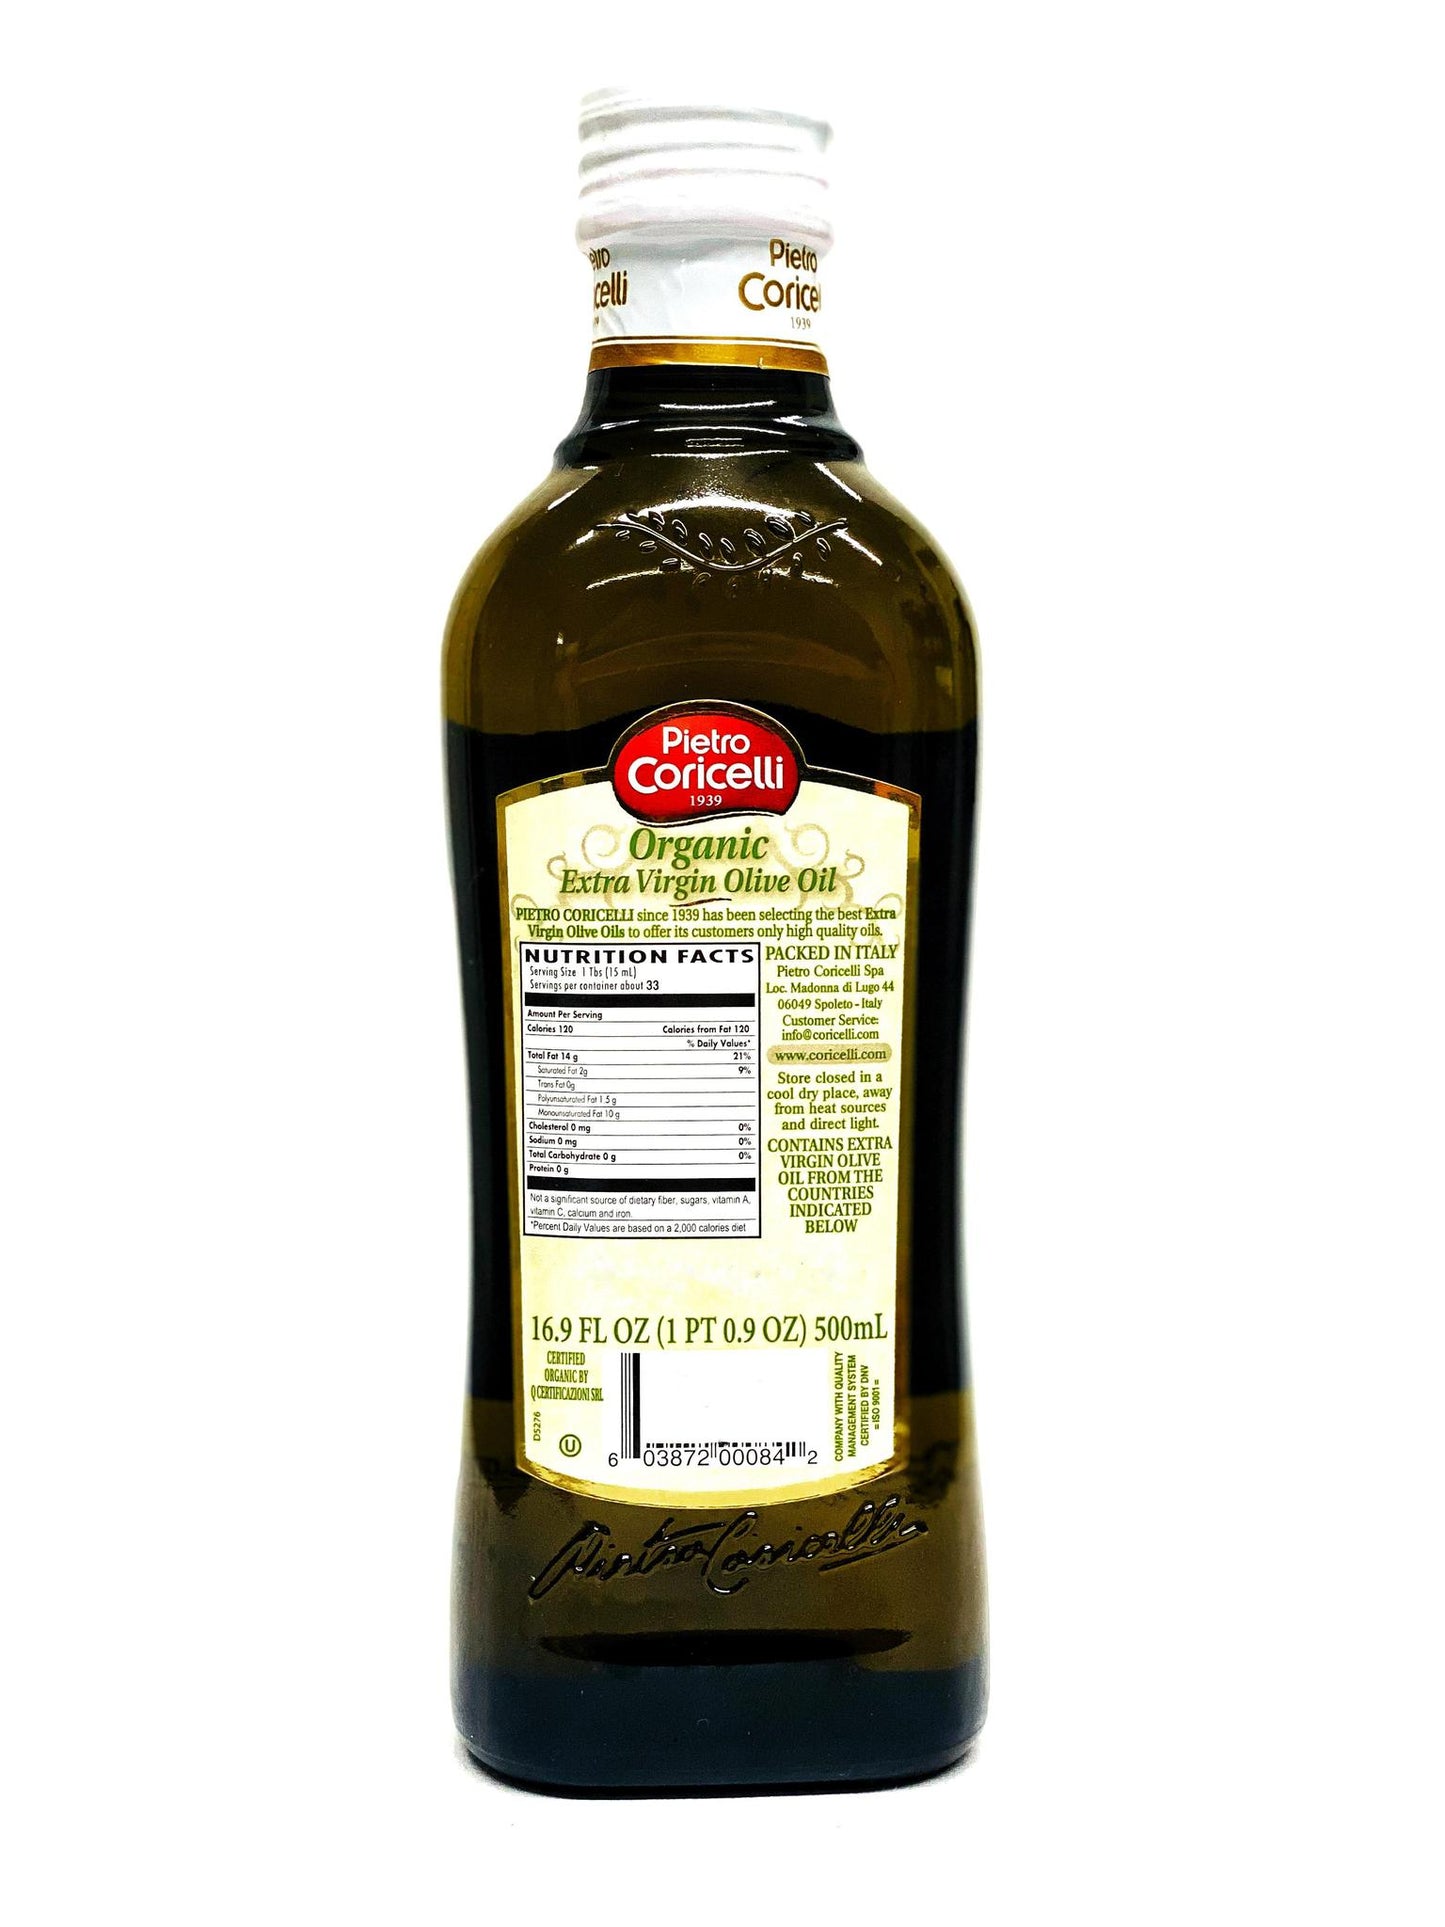 Pietro Coricelli Organic Extra Olive Oil, 16.9 fl oz